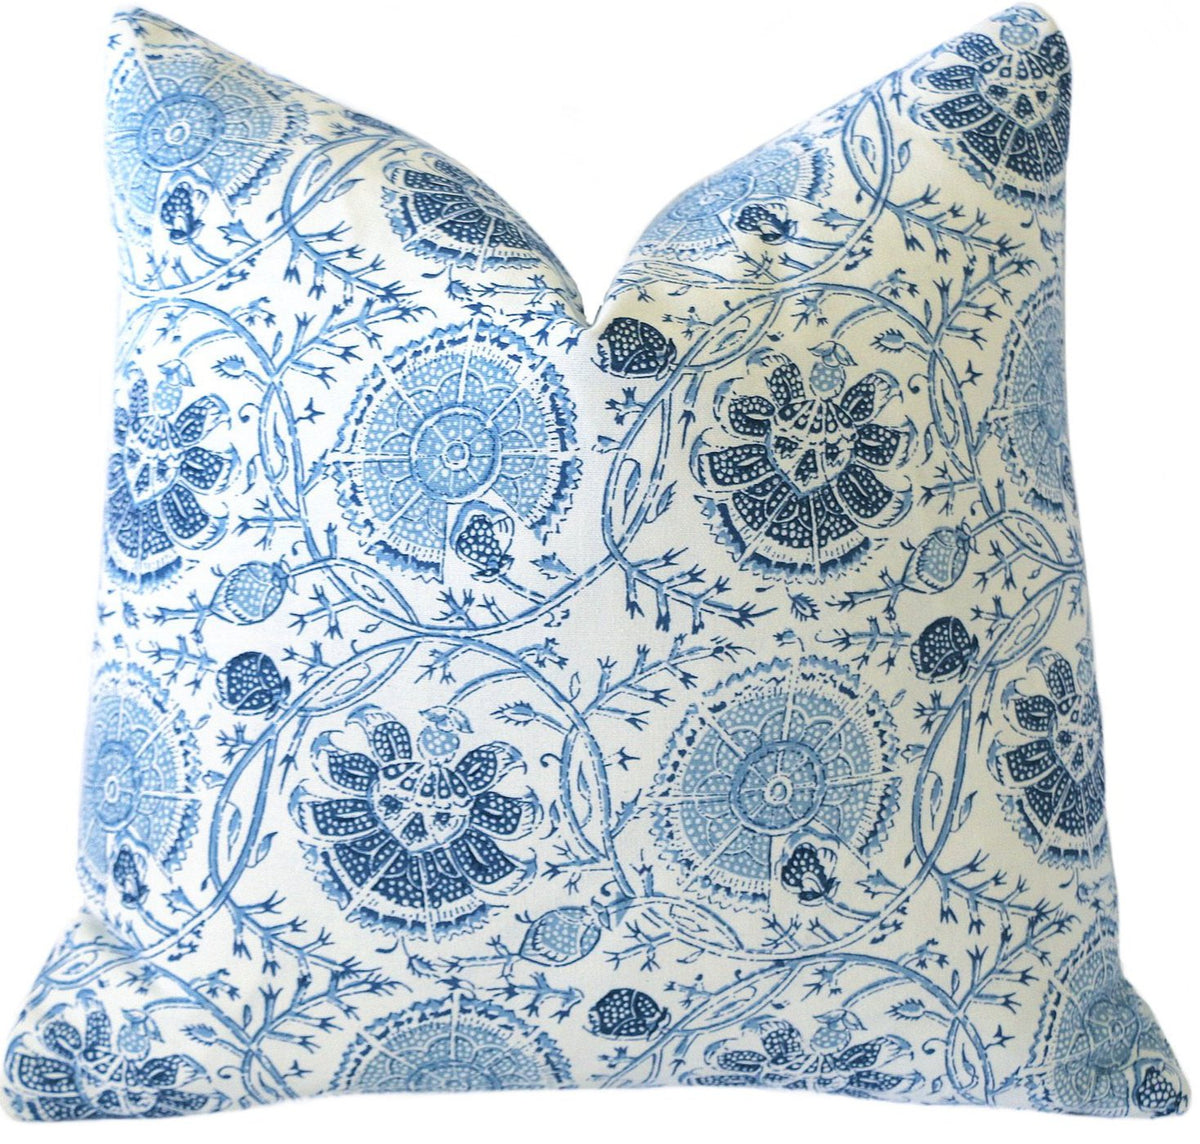 Blue Beige Floral Print Throw Pillow Cover Spun Polyester 